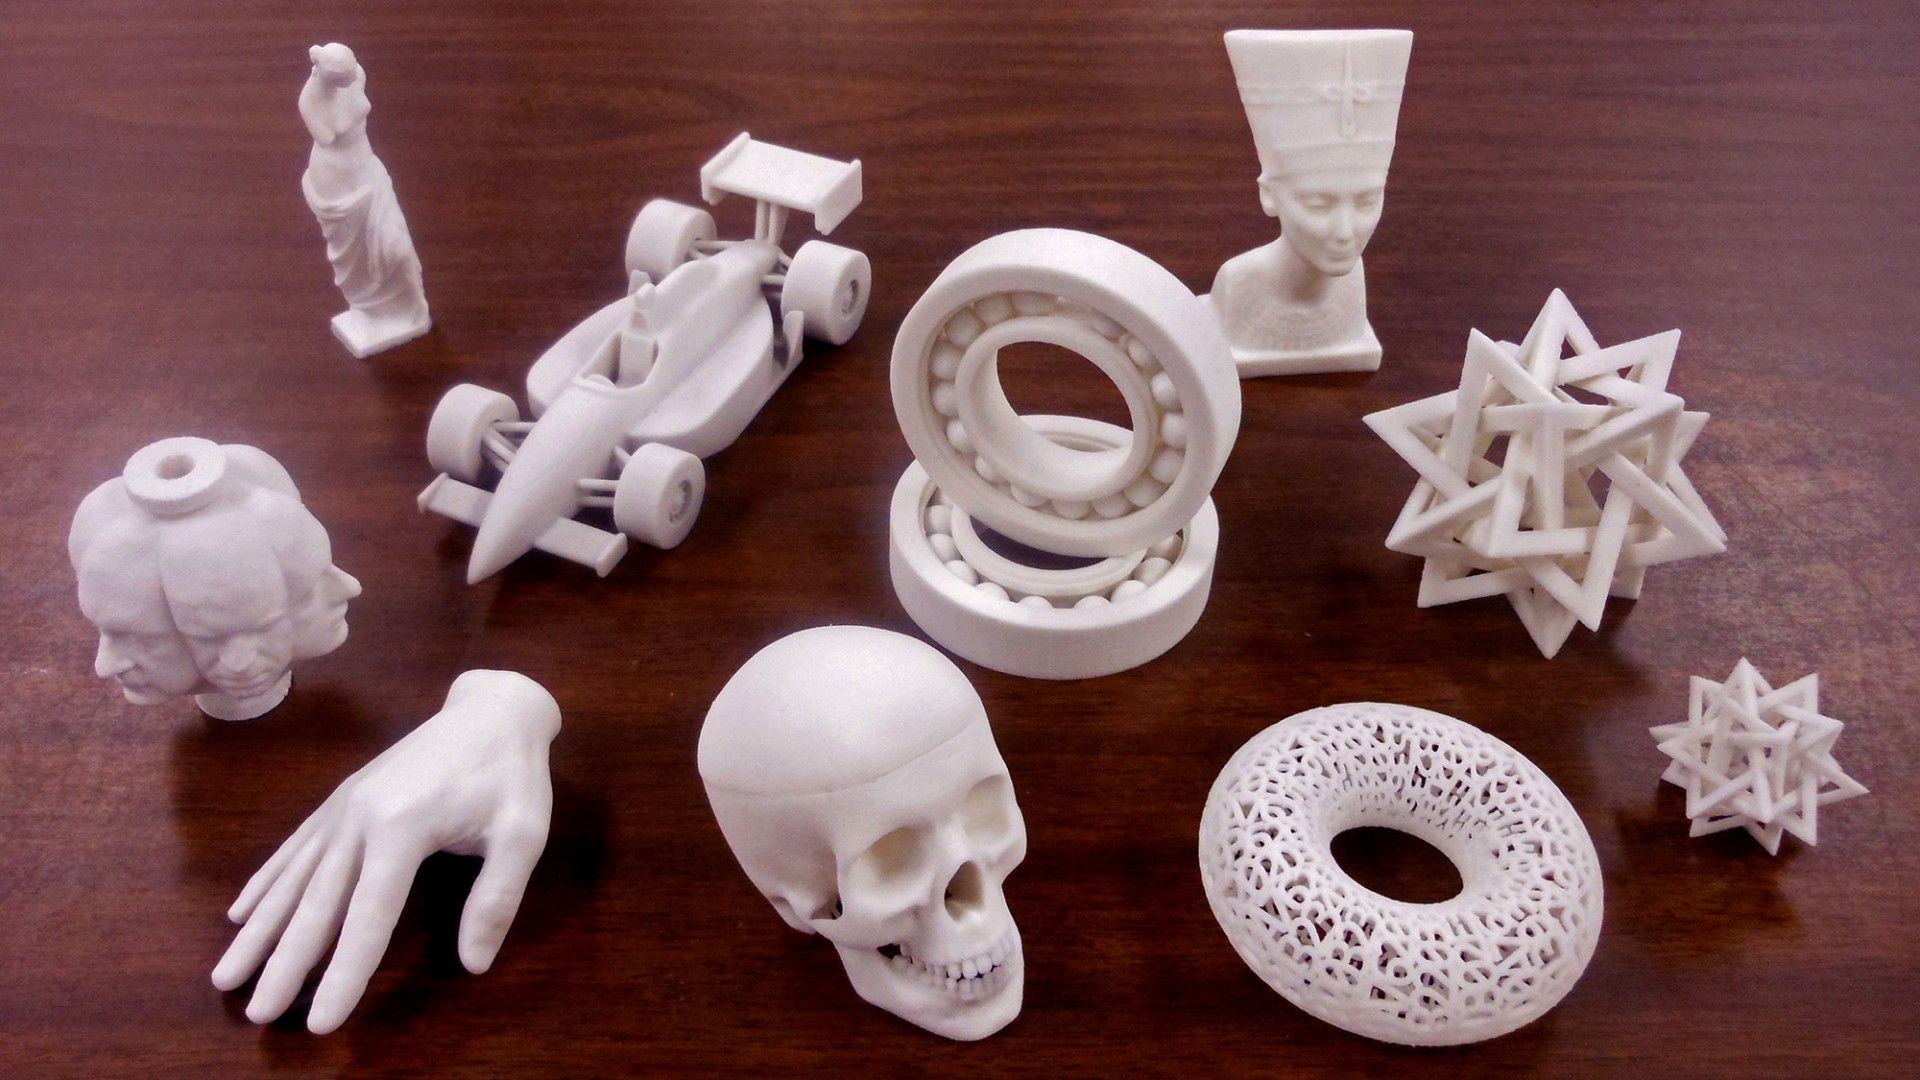 3D printer xizmati.Услуги 3D Печати 24/7.